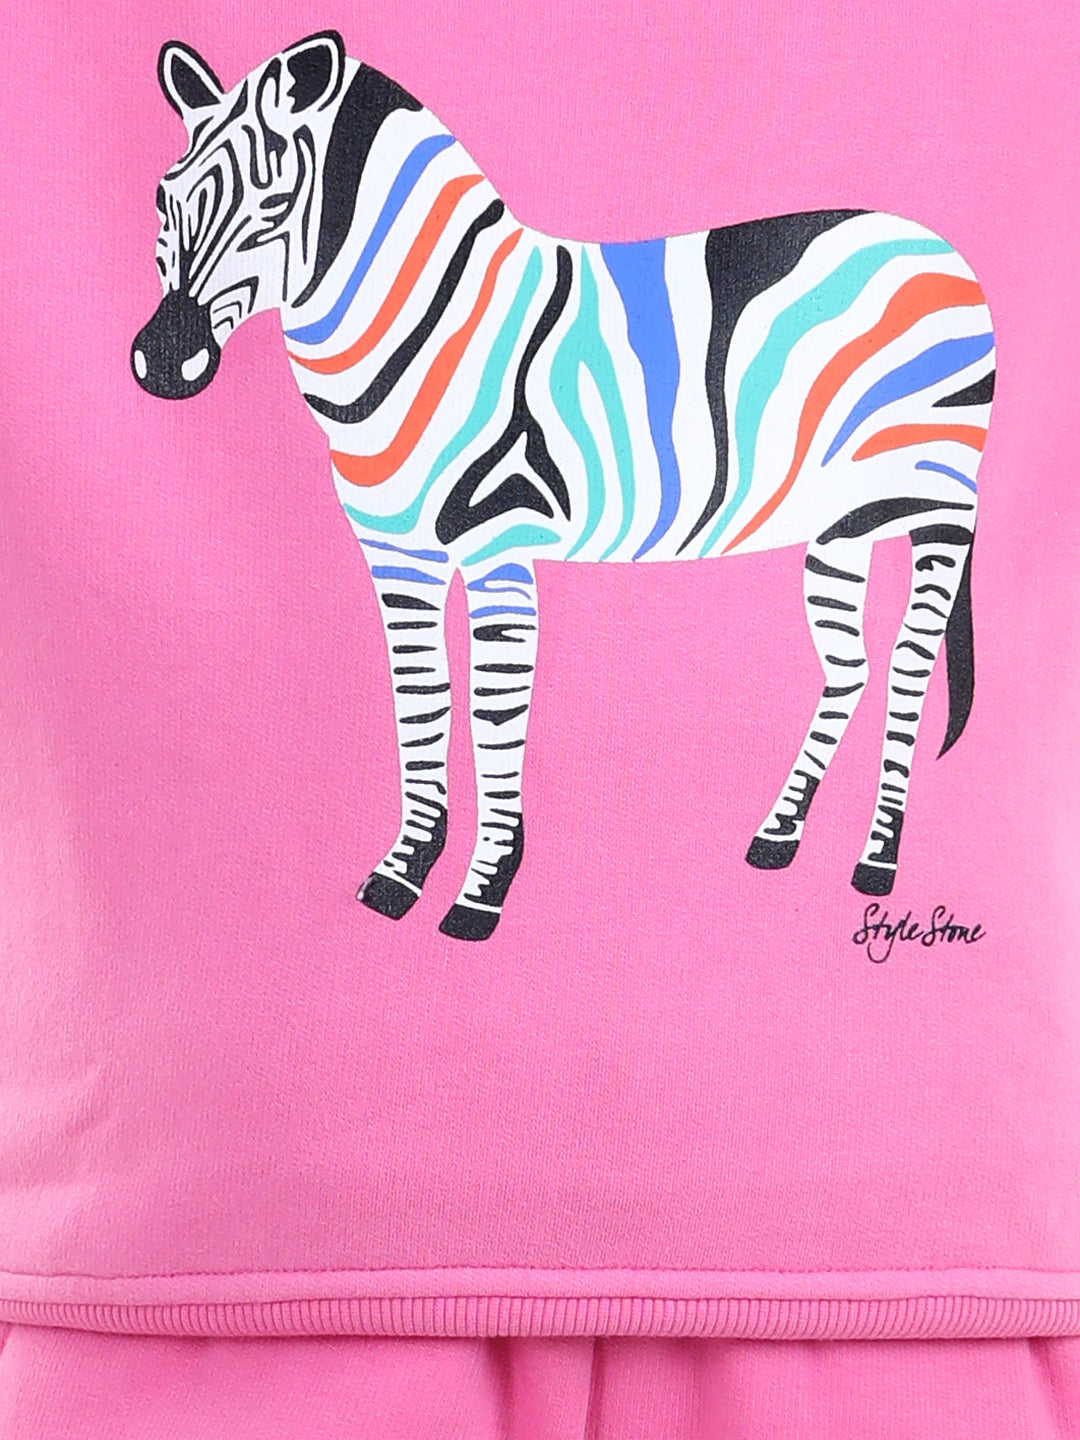 Girls Dark Pink Zebra Printed Hooded Track Suit Set